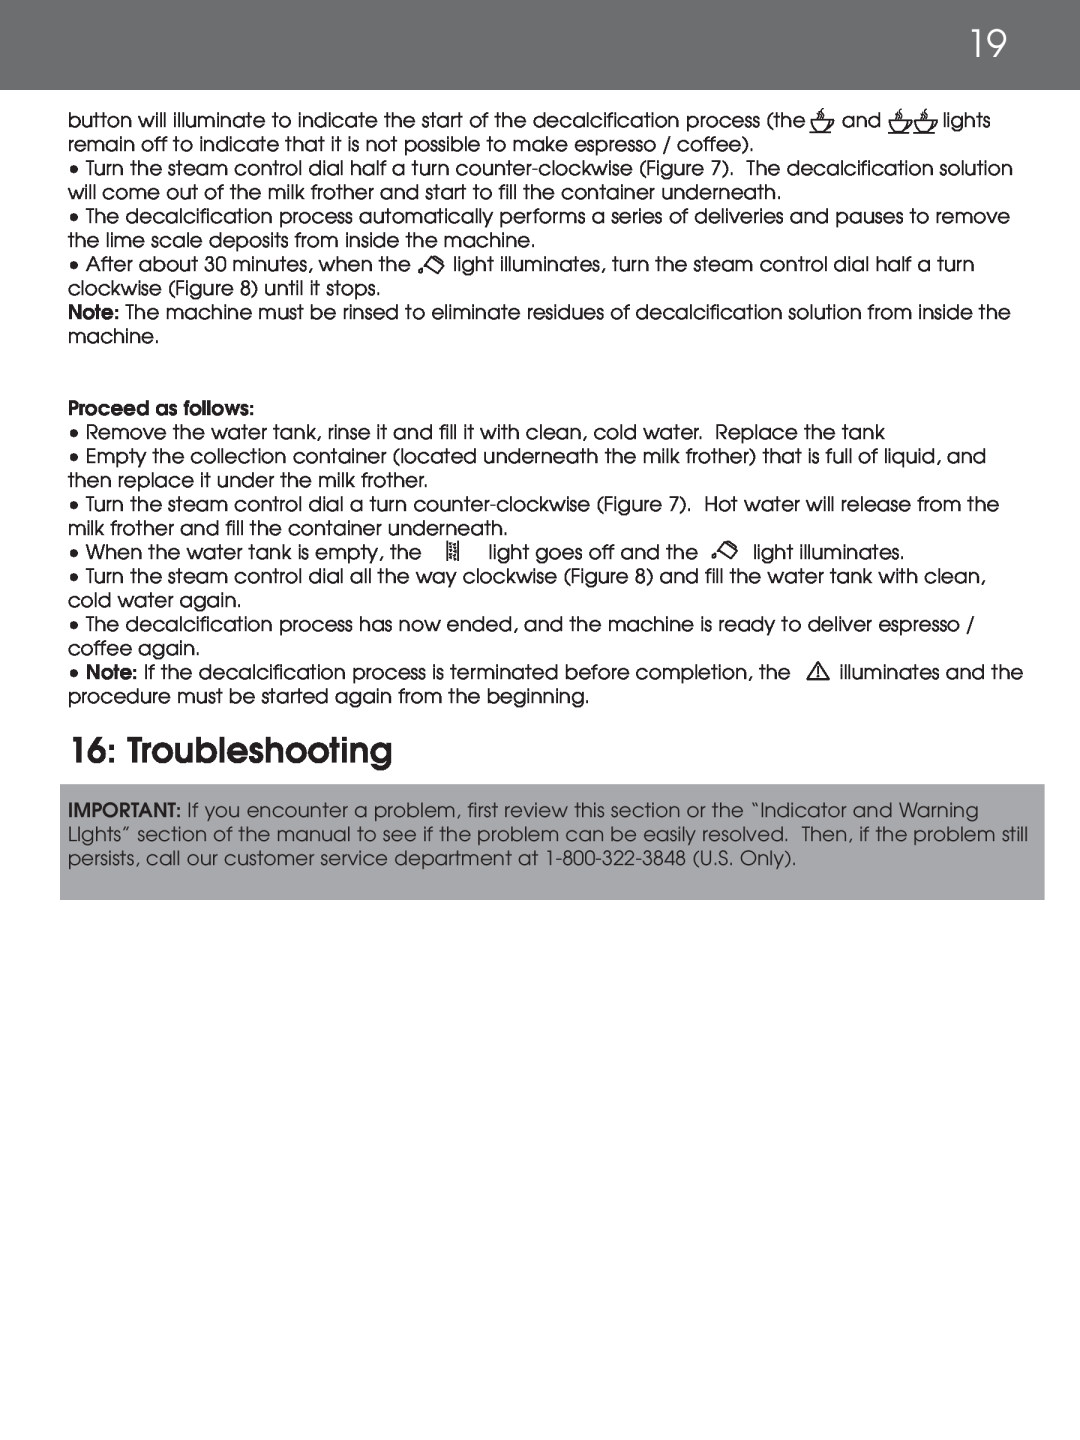 DeLonghi EAM4000 instruction manual 16: Troubleshooting 